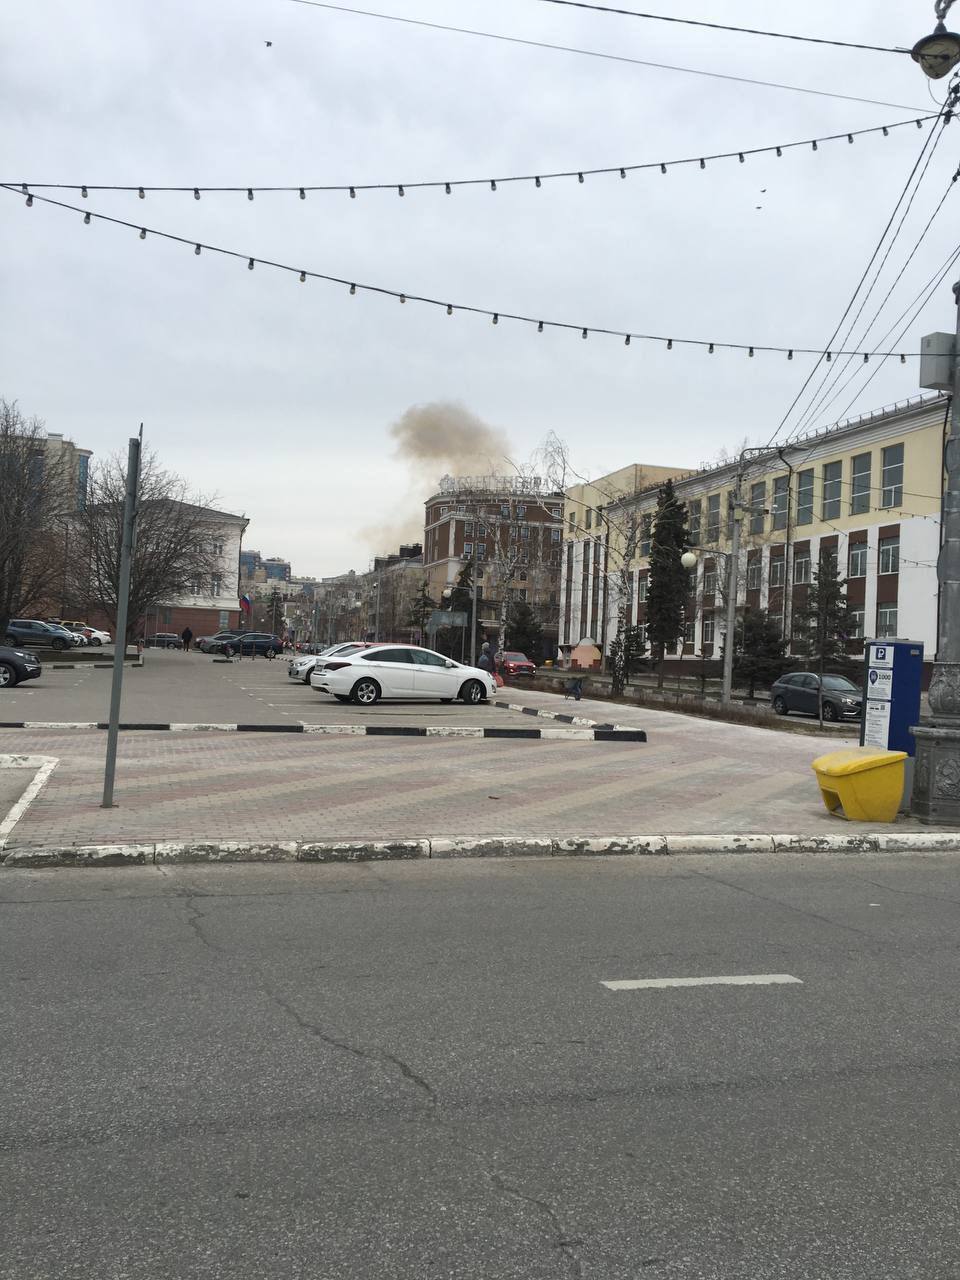 В Белгороде дрон атаковал здание ФСБ, поднялся дым. Фото